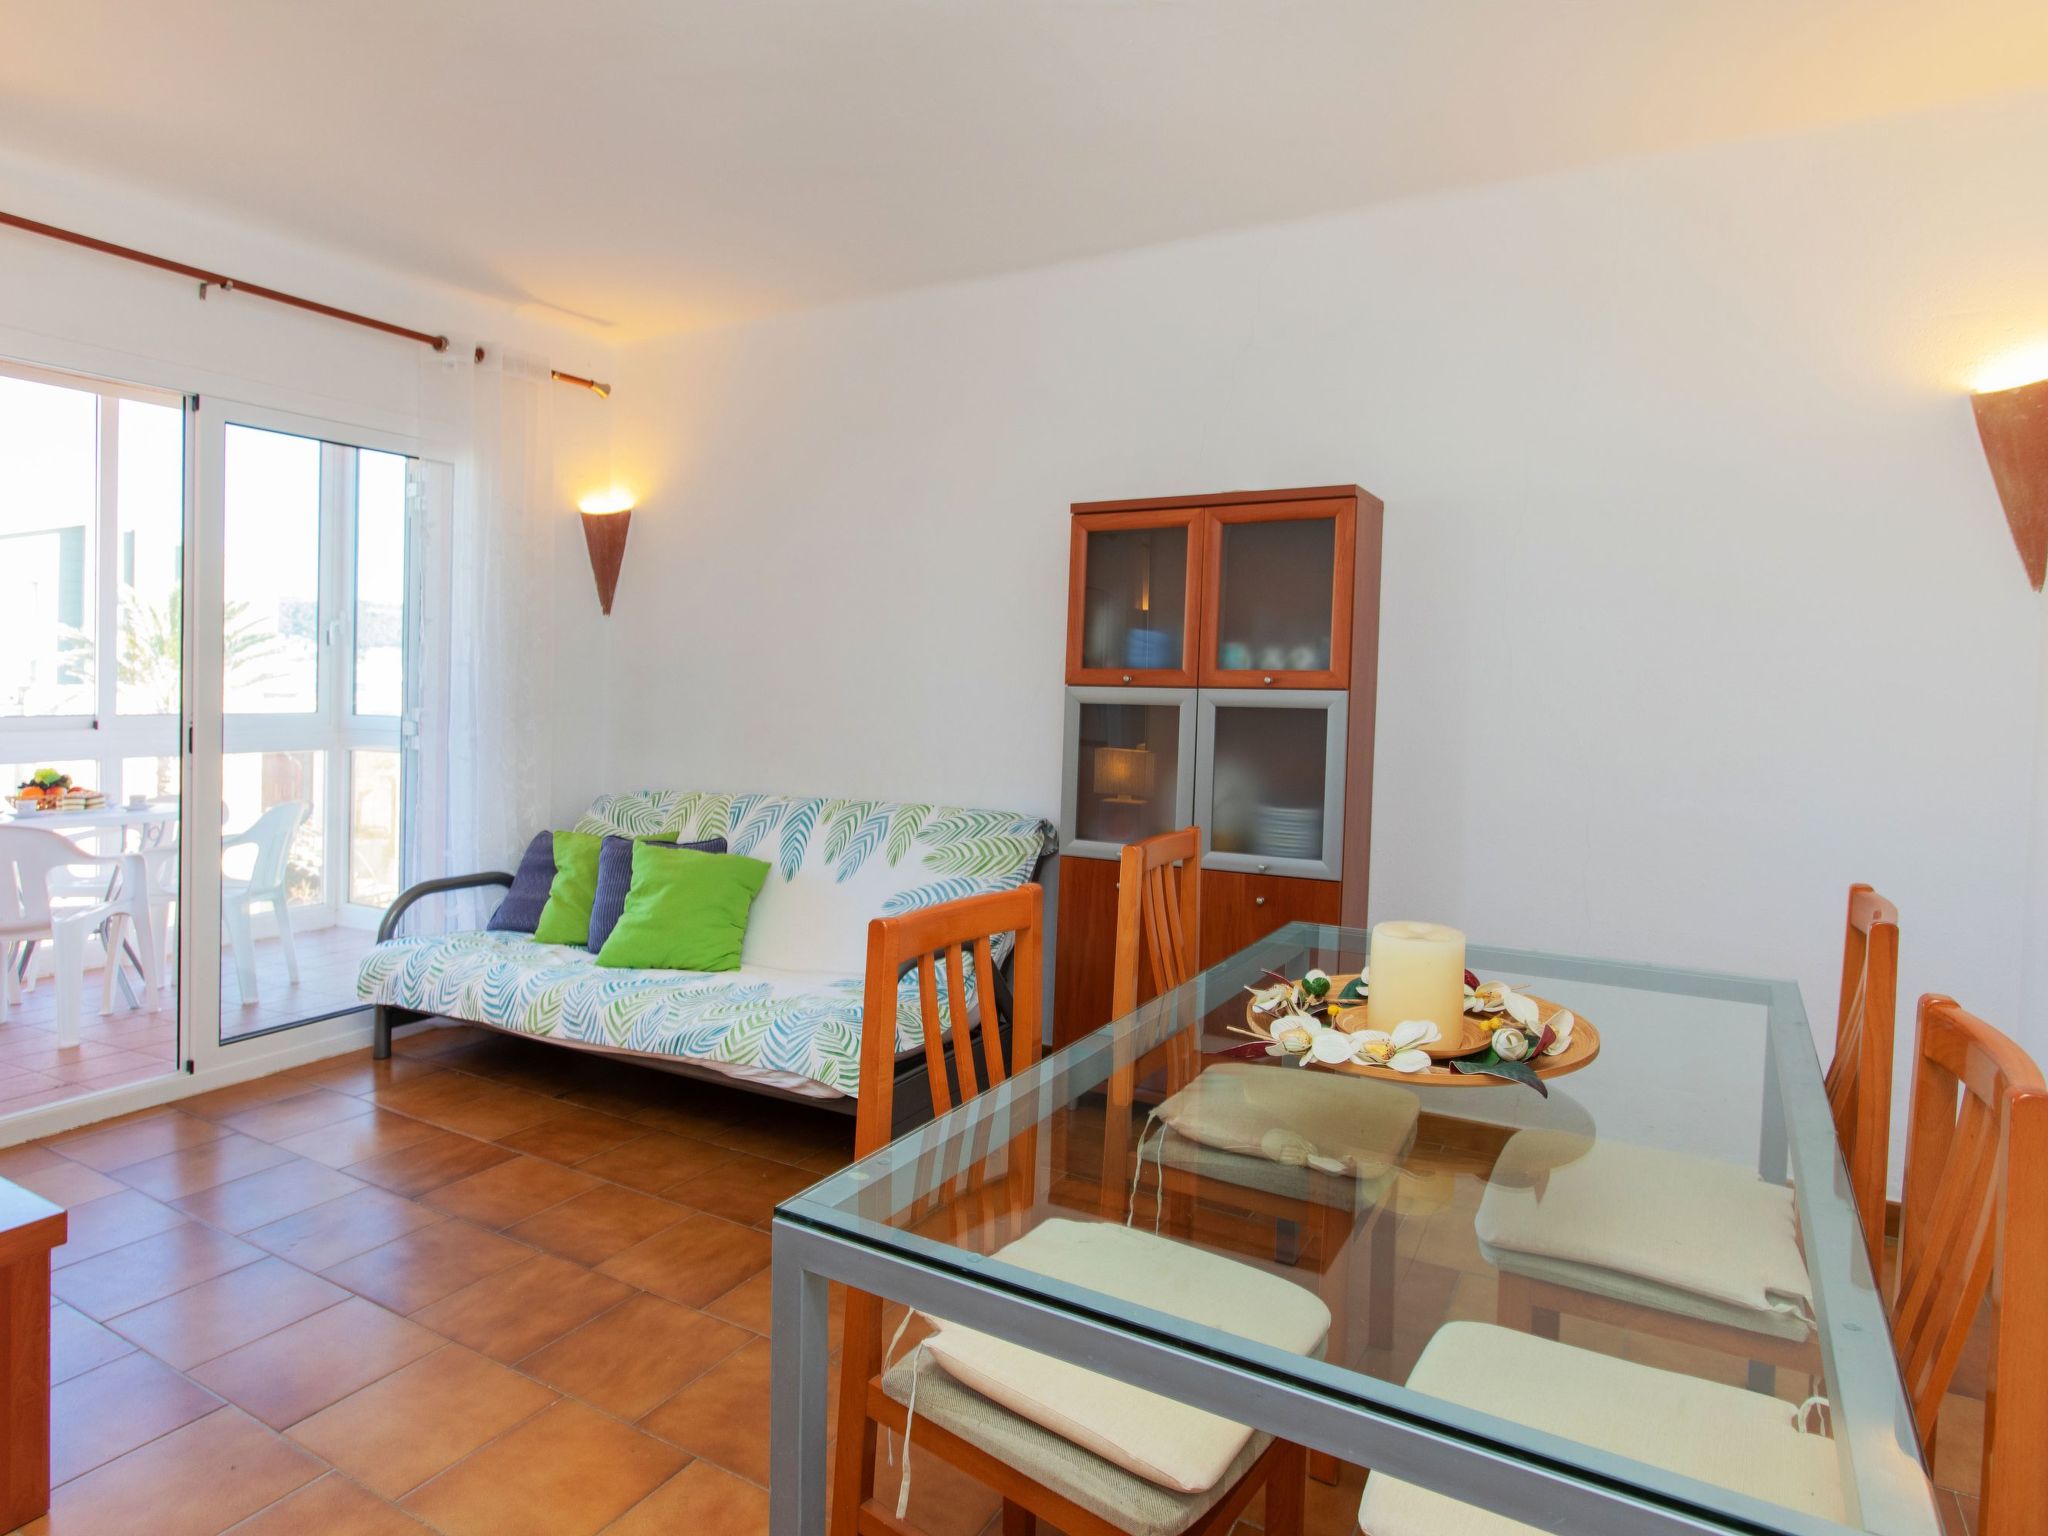 Photo 3 - Appartement de 2 chambres à Torroella de Montgrí avec vues à la mer